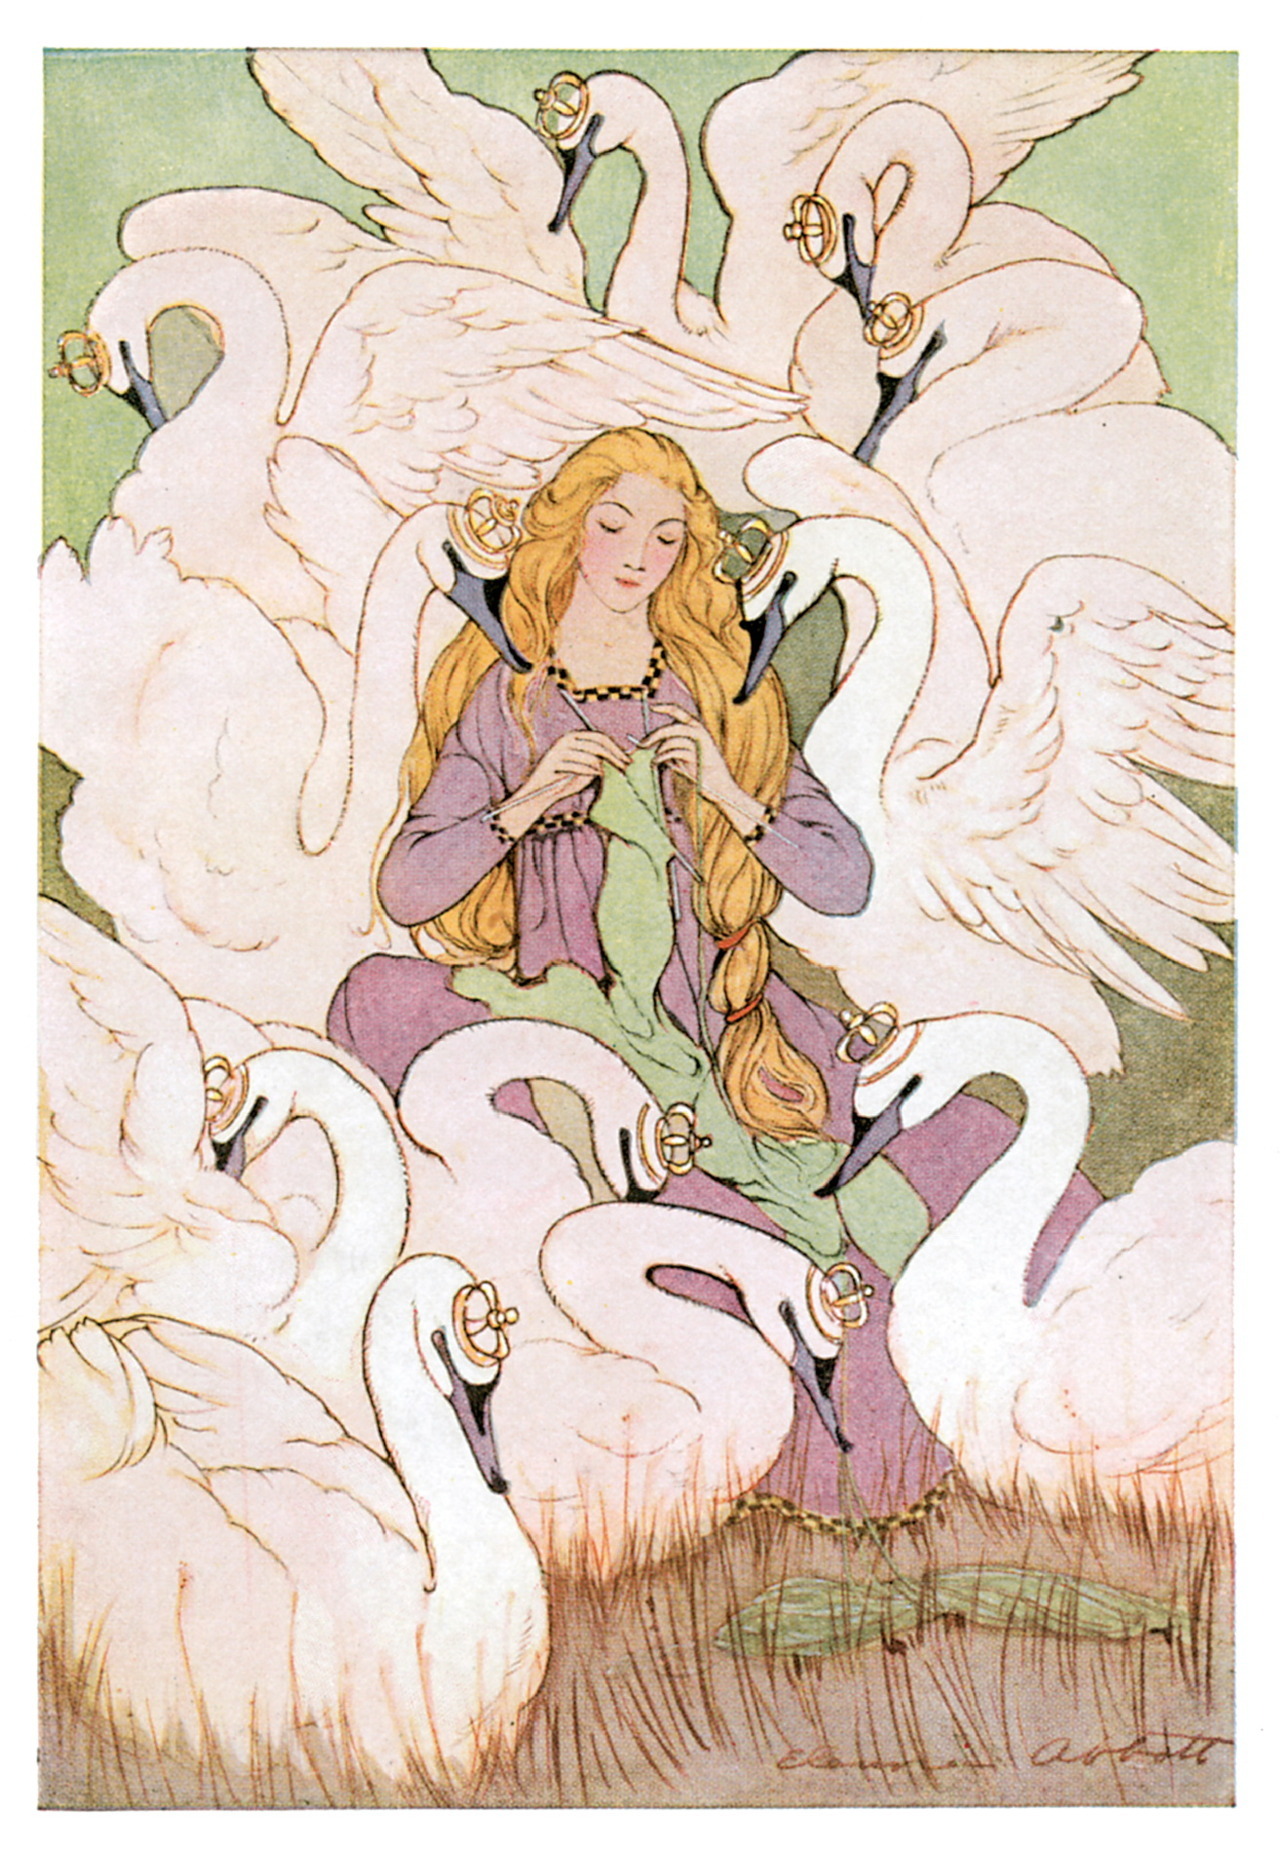 Princess Stories - The Wild Swans - Page 1 - Wattpad